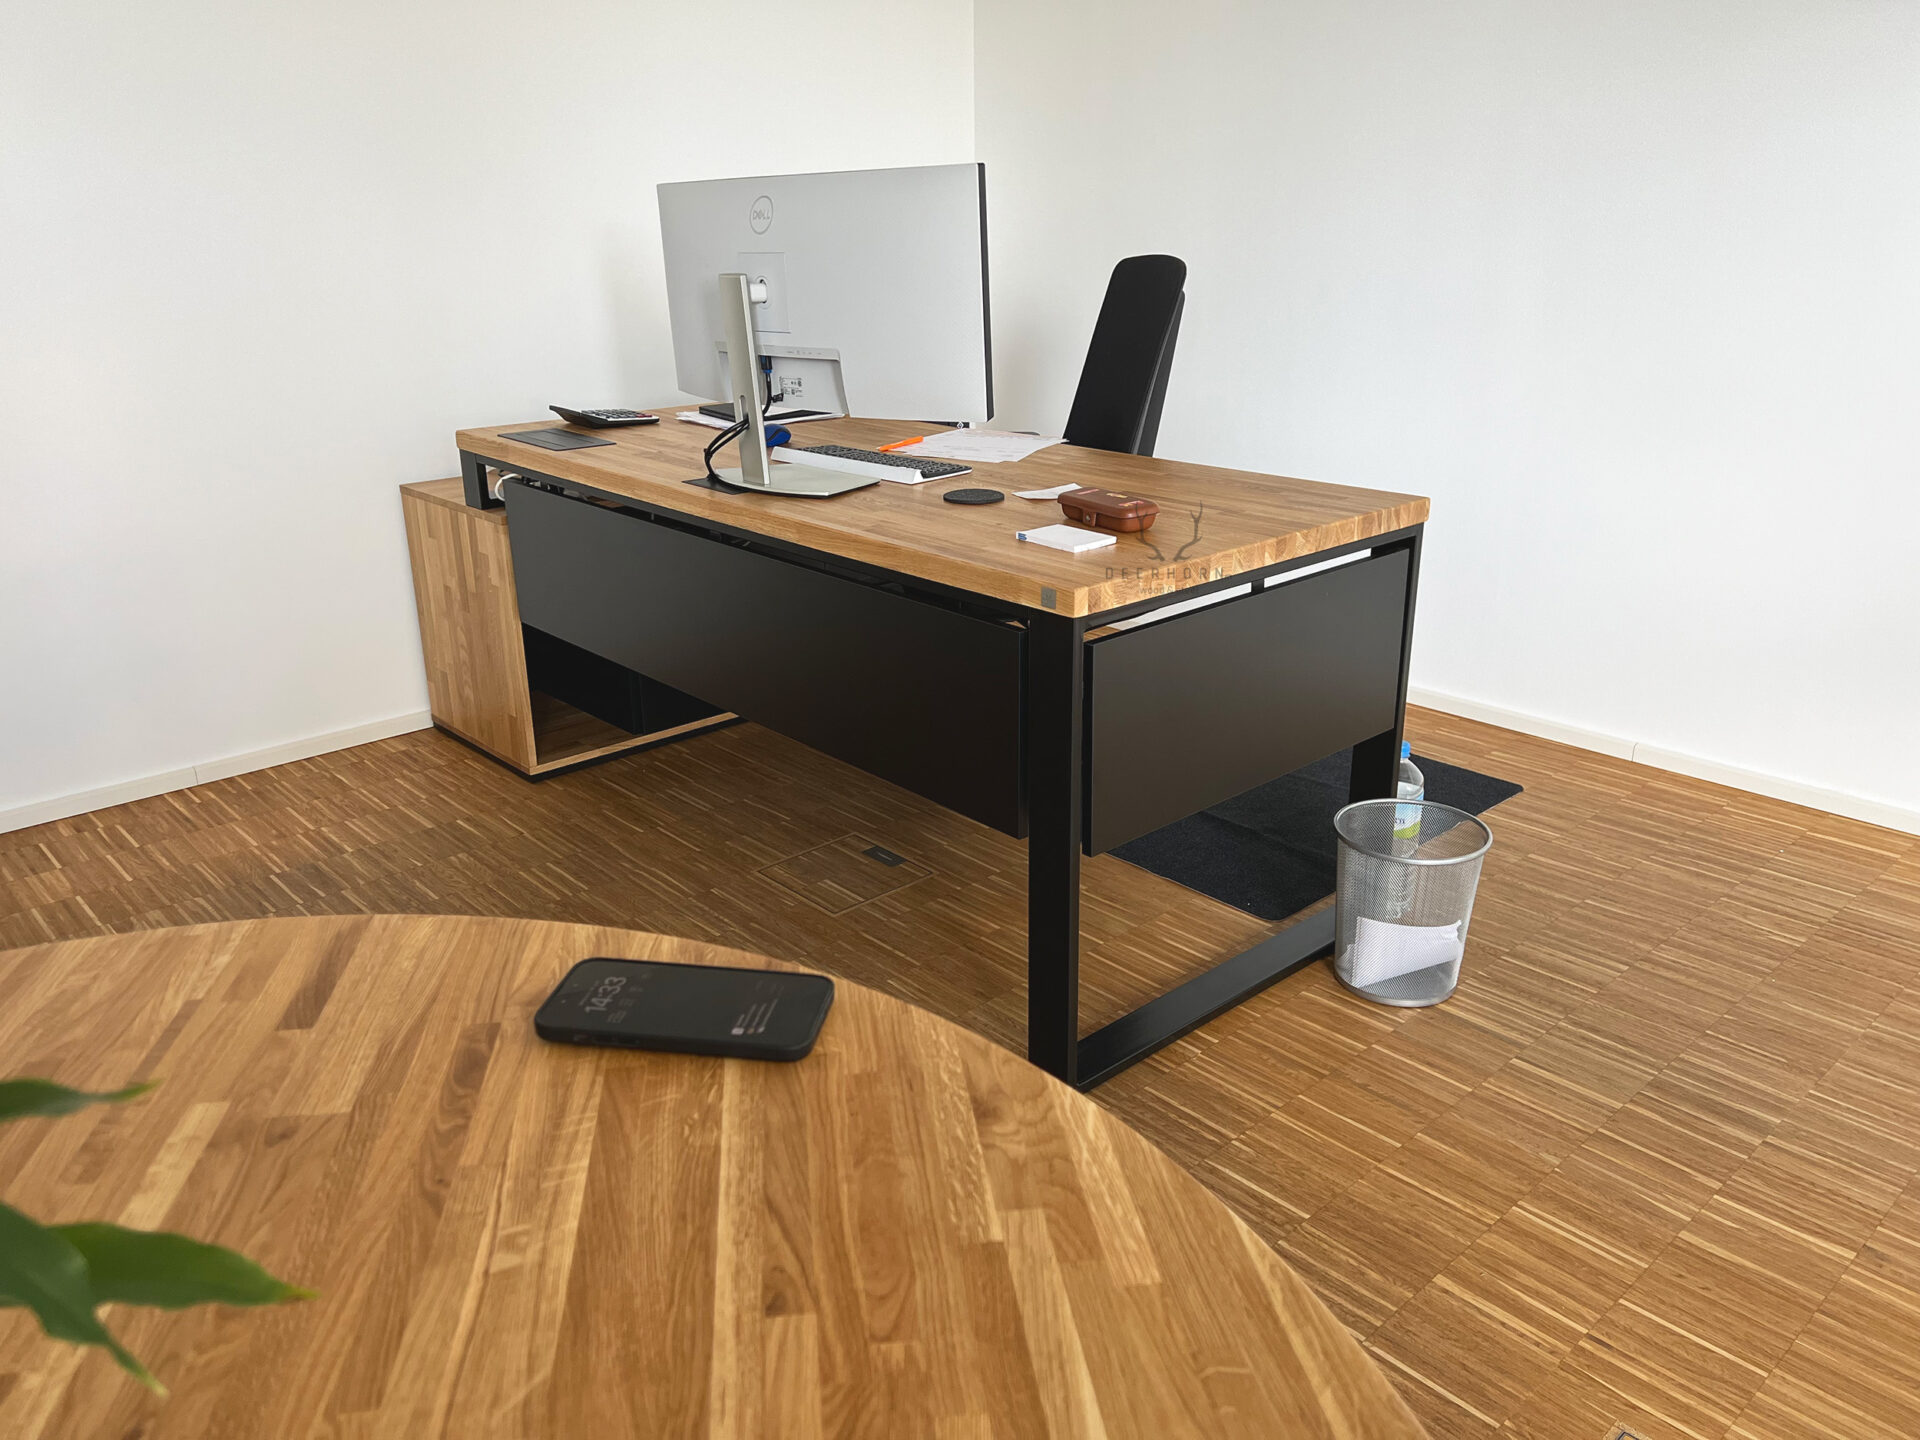 biurko czarne z monitorem na blacie biurka